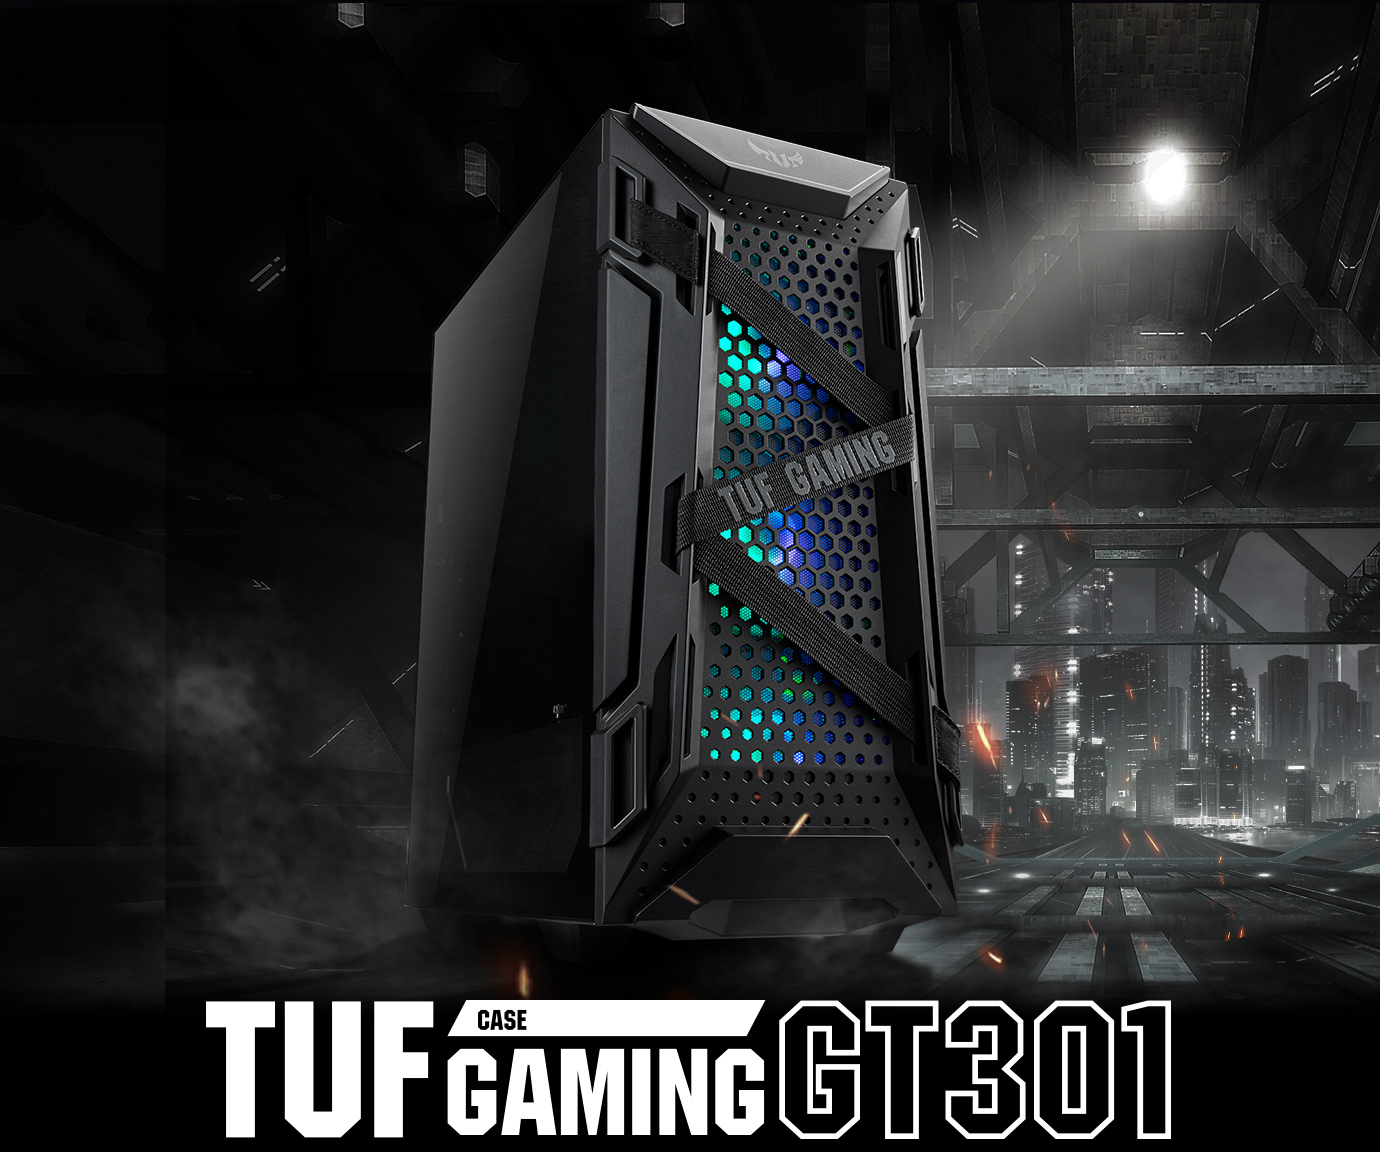 TUF Gaming GT301｜Gaming Cases｜ASUS Global